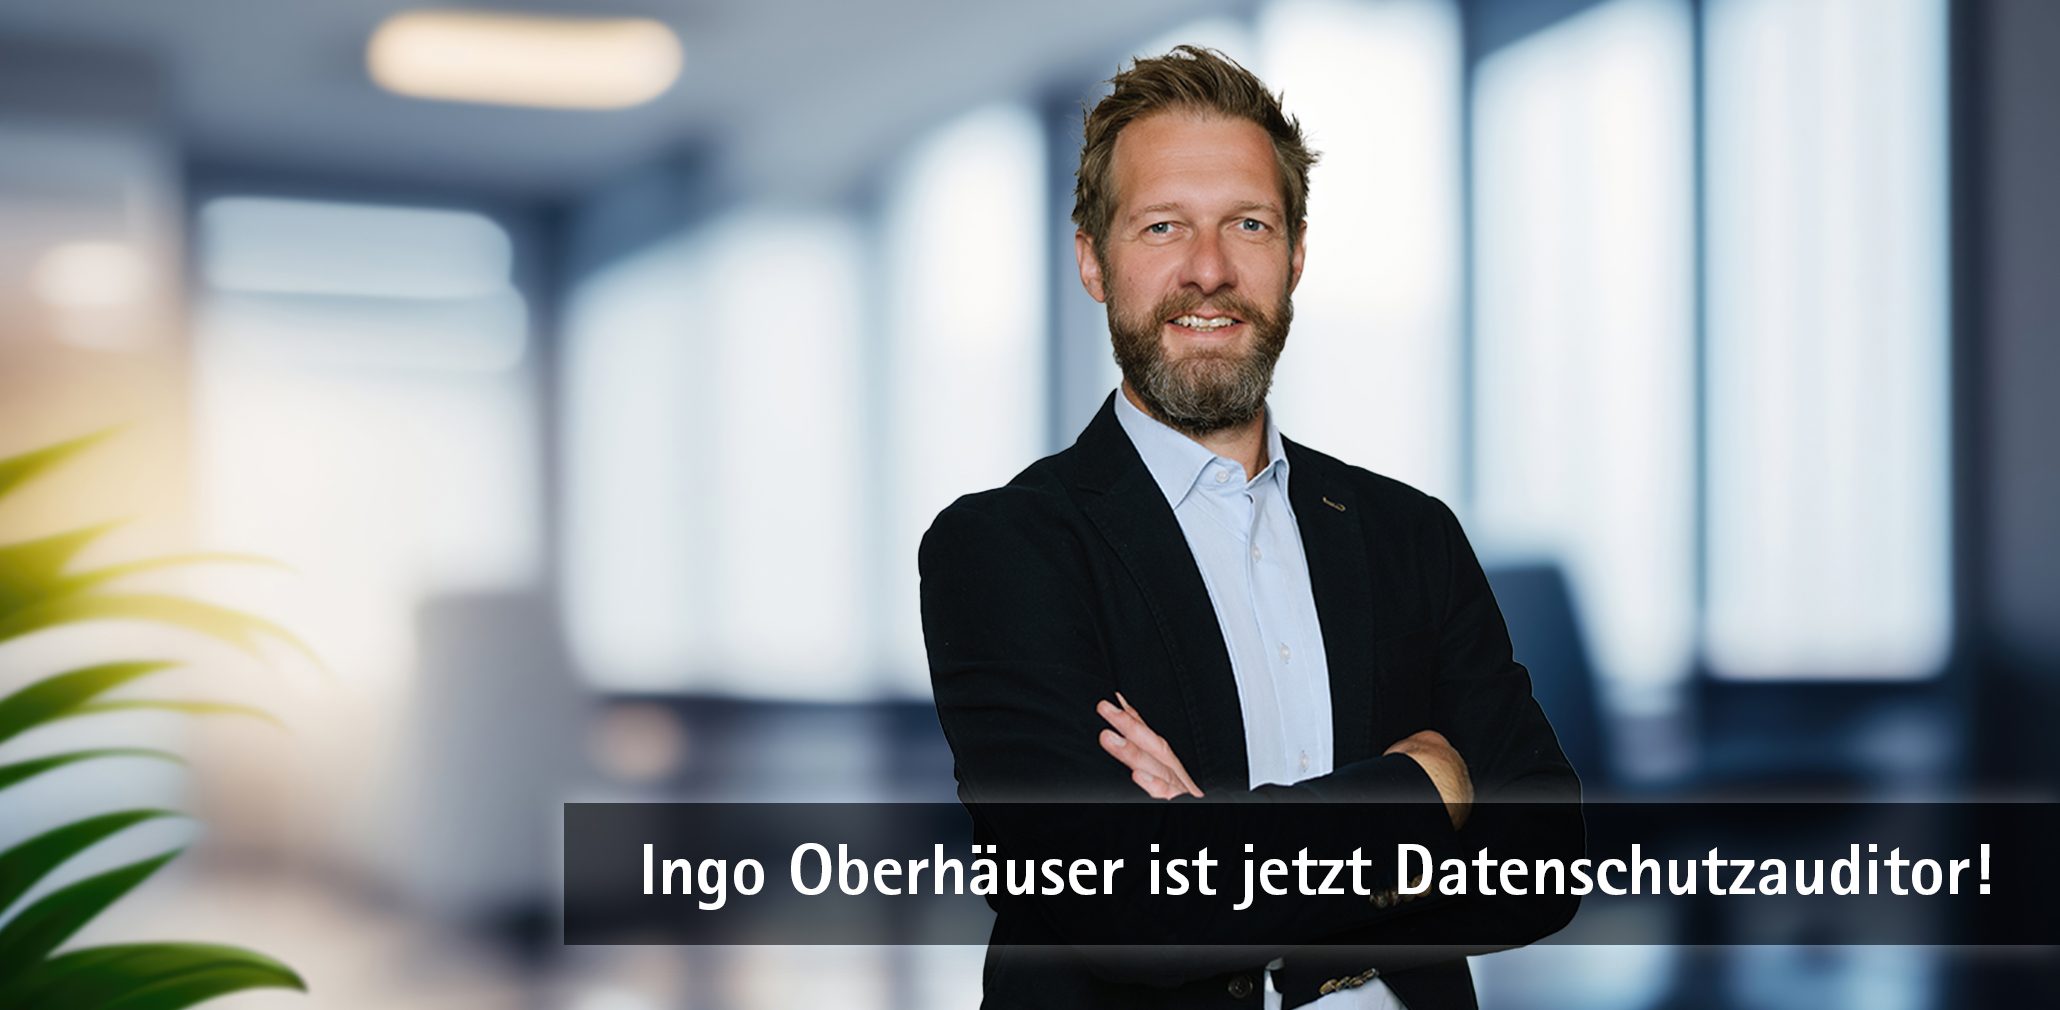 Ingo-Oberhäuser-ist-jetzt-Datenschutzauditor-SONNTAG-IT-Solutions-Augsburg